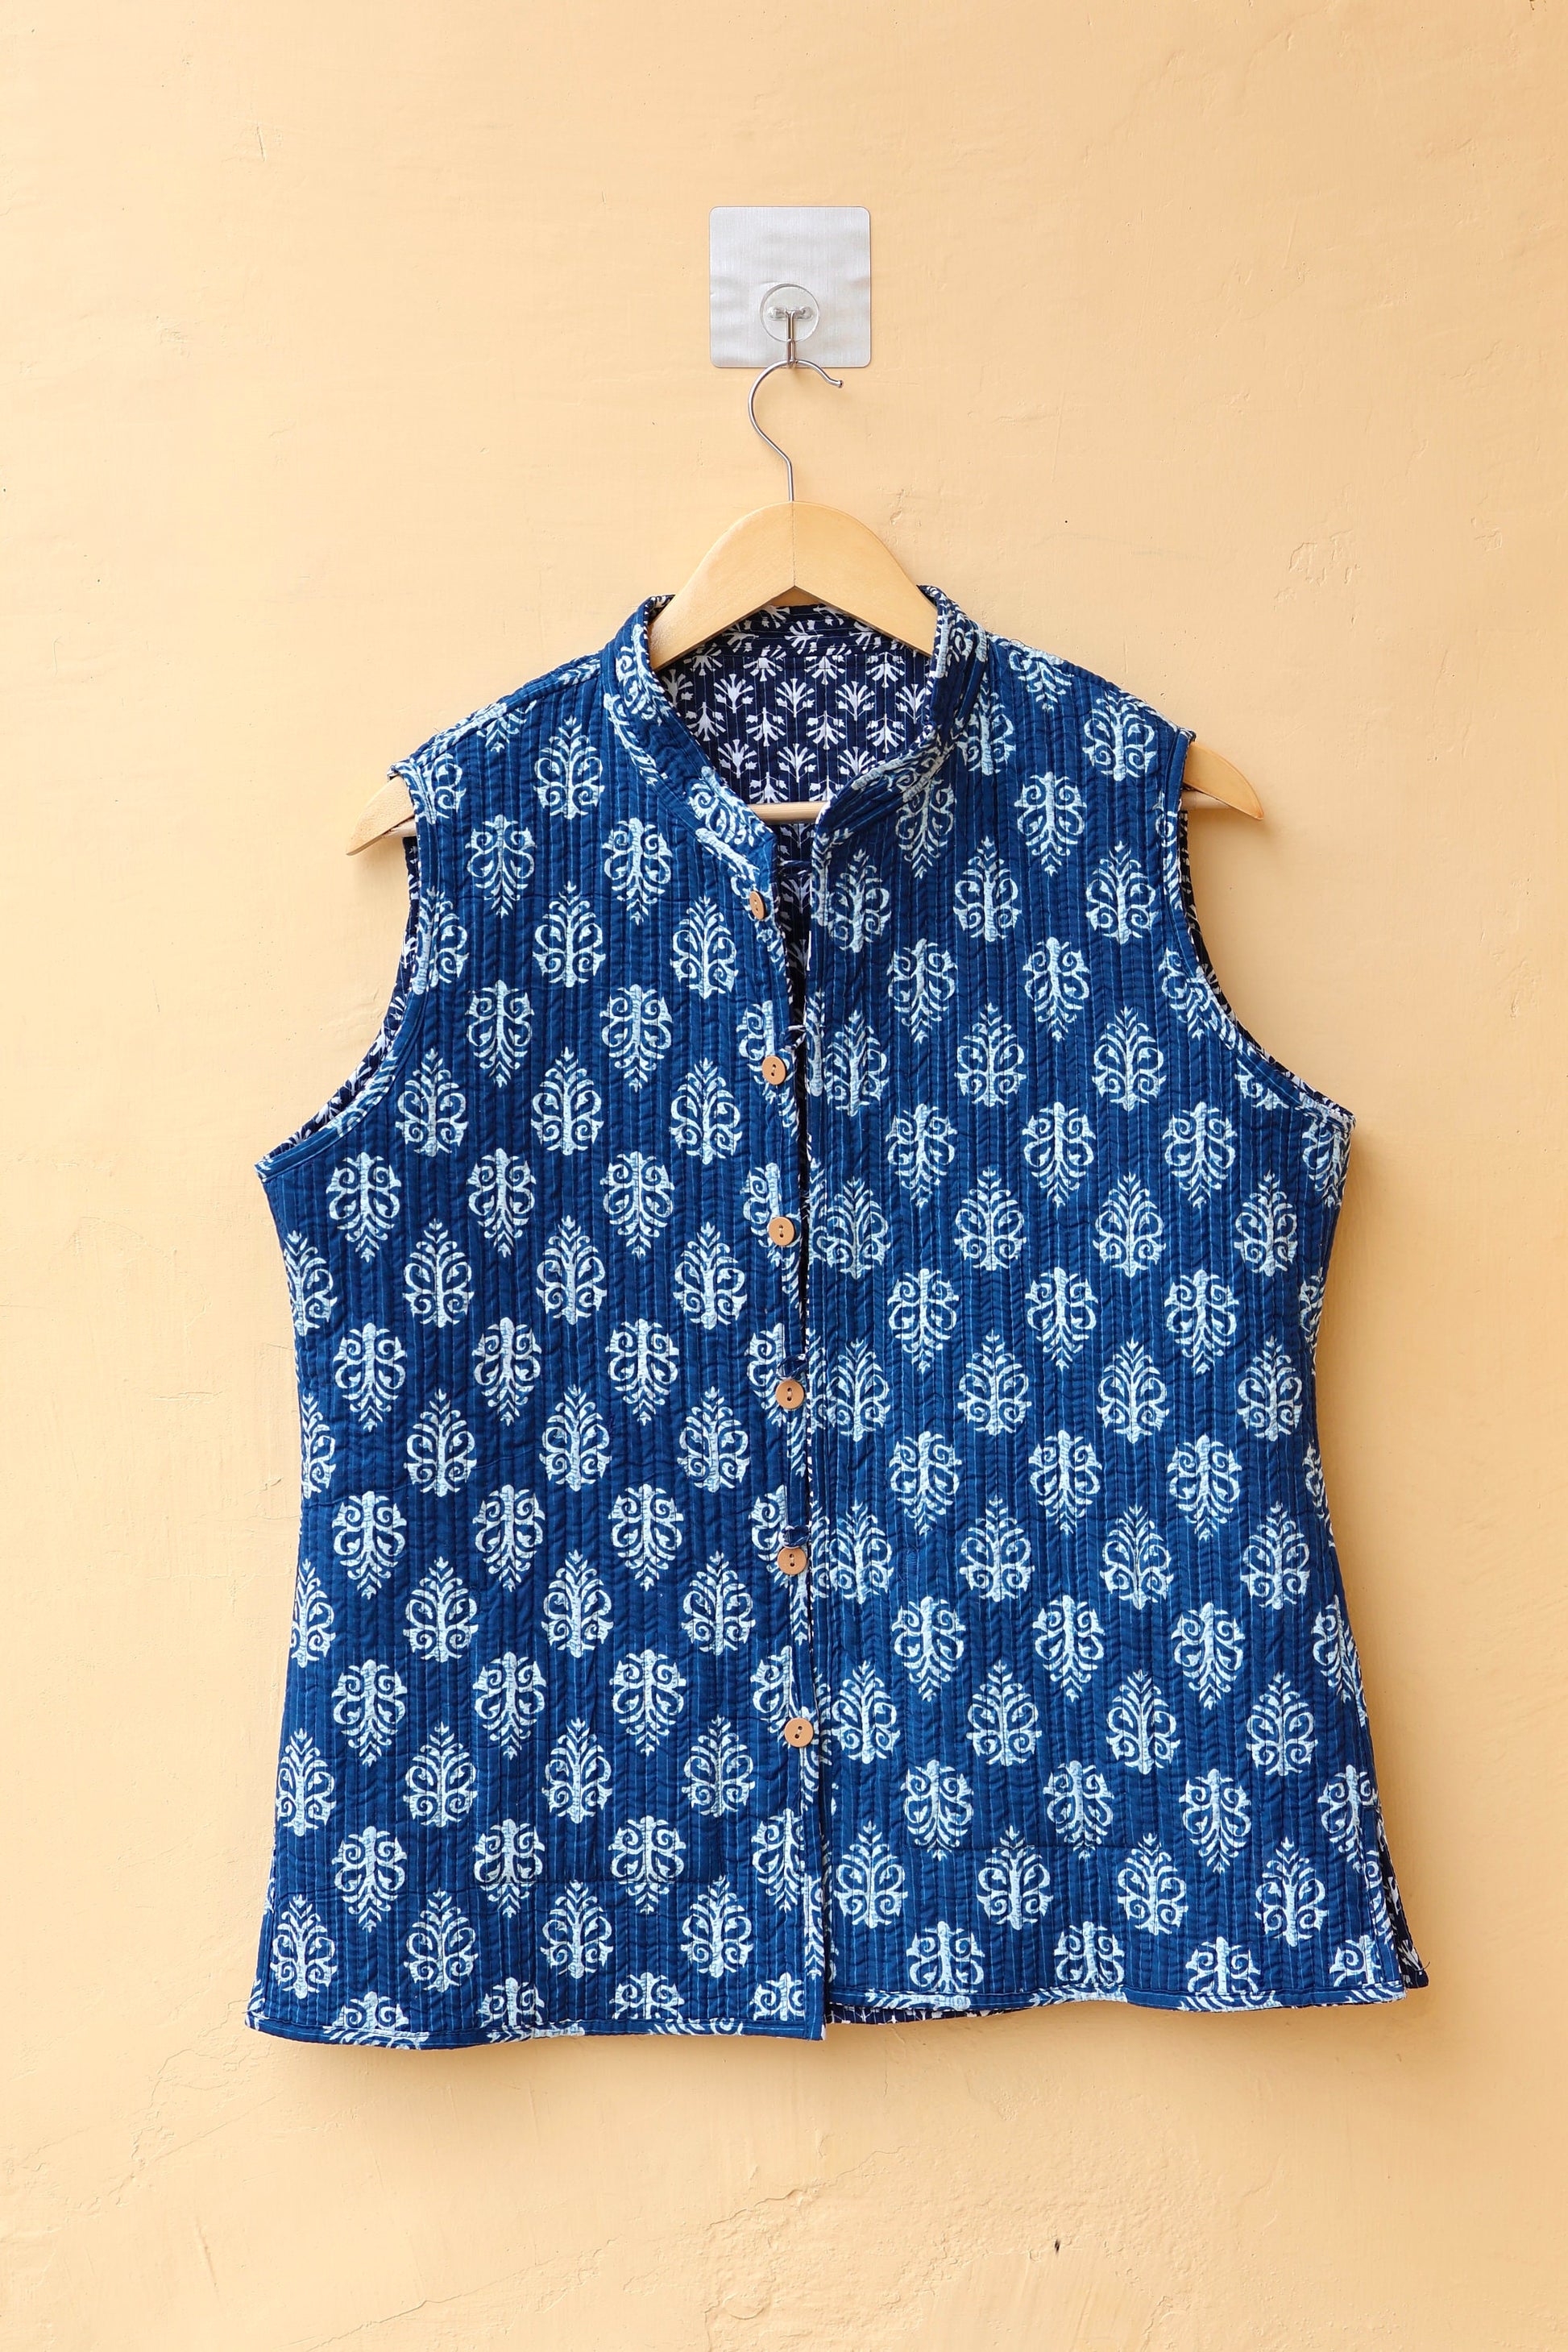 Indian Handmade Quilted Cotton Sleeveless Jacket Blue & White Stylish Women's Vest, Indigo Print Reversible Jacket, Gift for Her